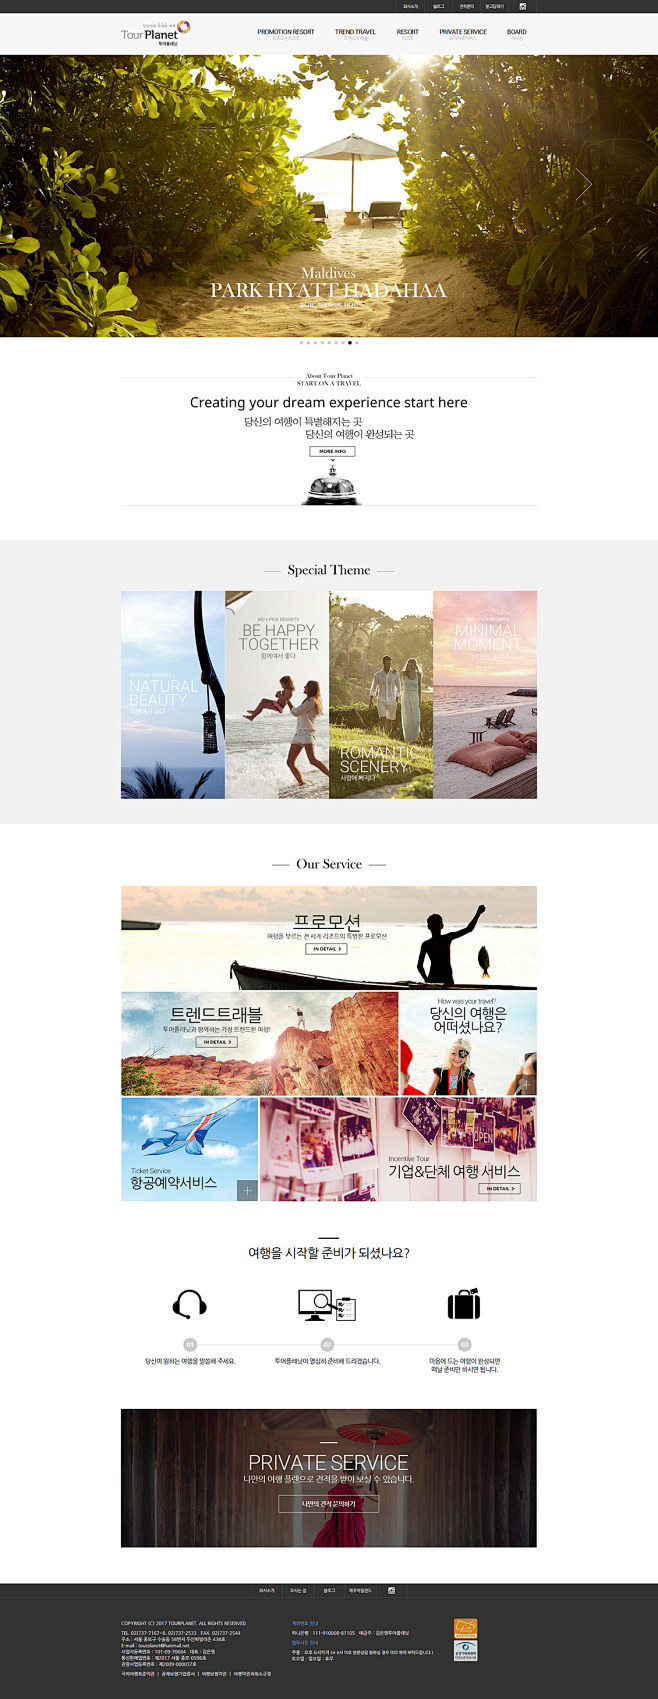 Tour Planet韩国旅行社企业网站